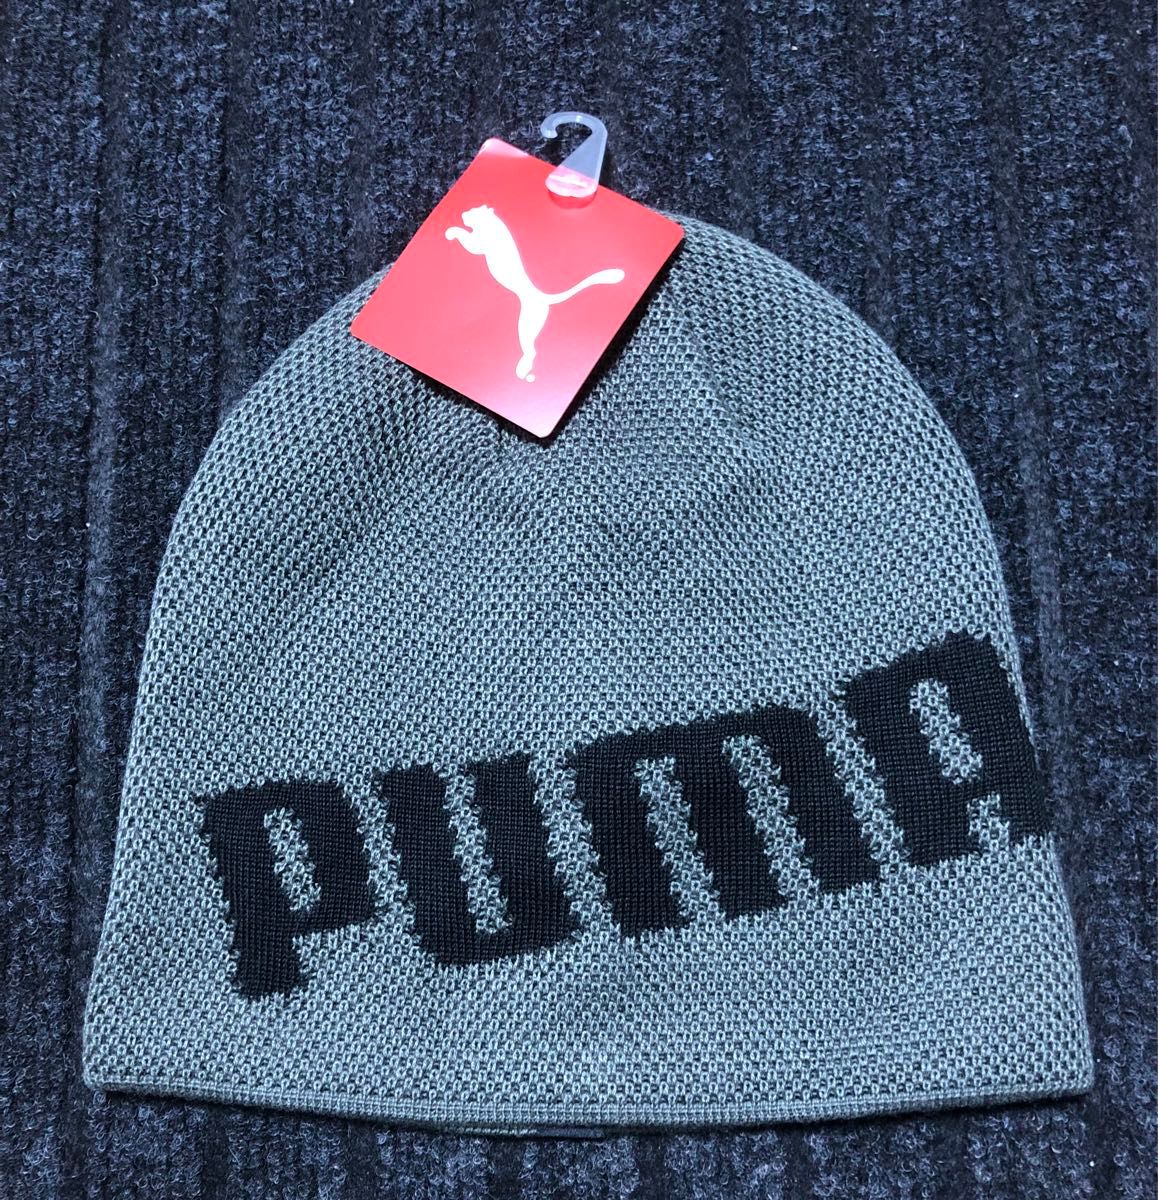 PUMA プーマのカーキのアクティブビーニー(ニット帽) 新品未使用